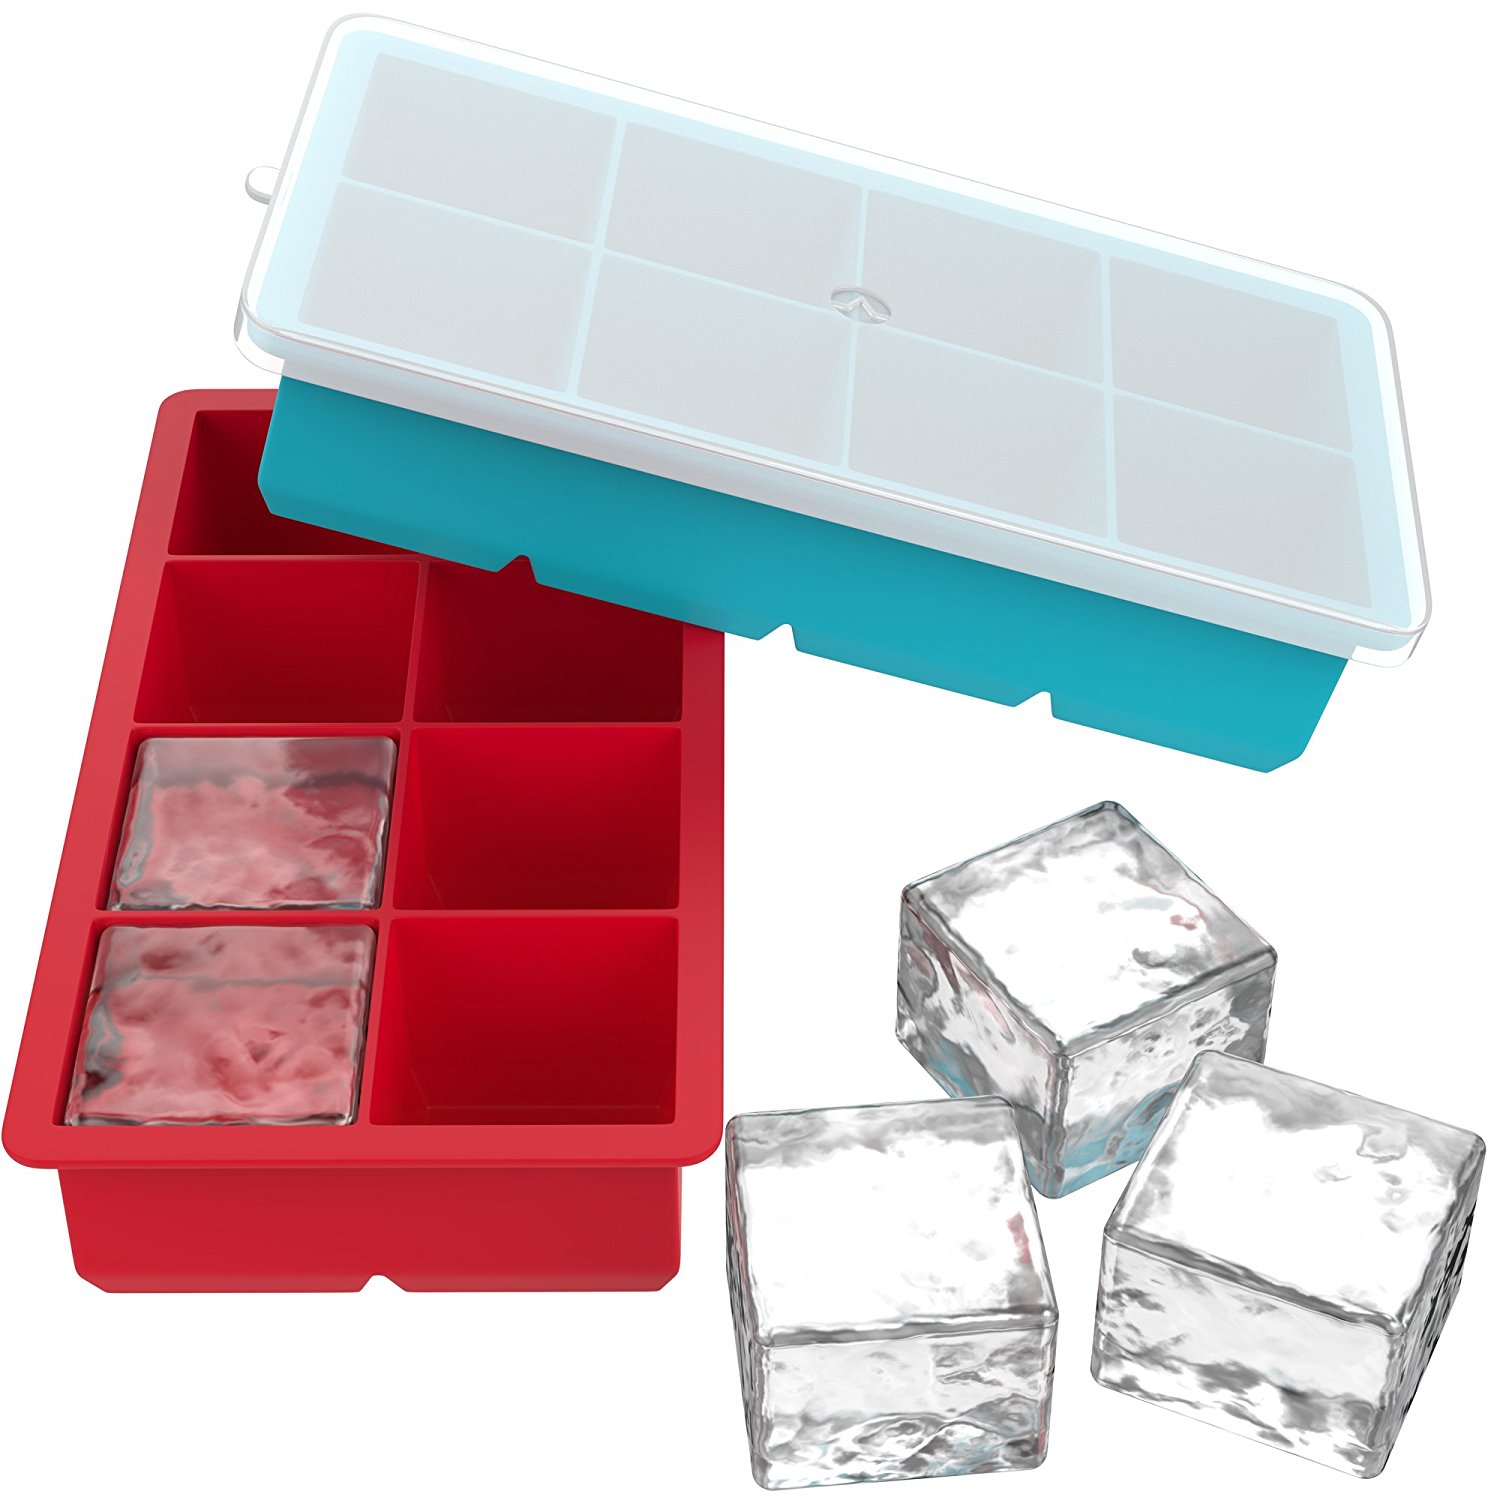 Ice cube trays cube shaped